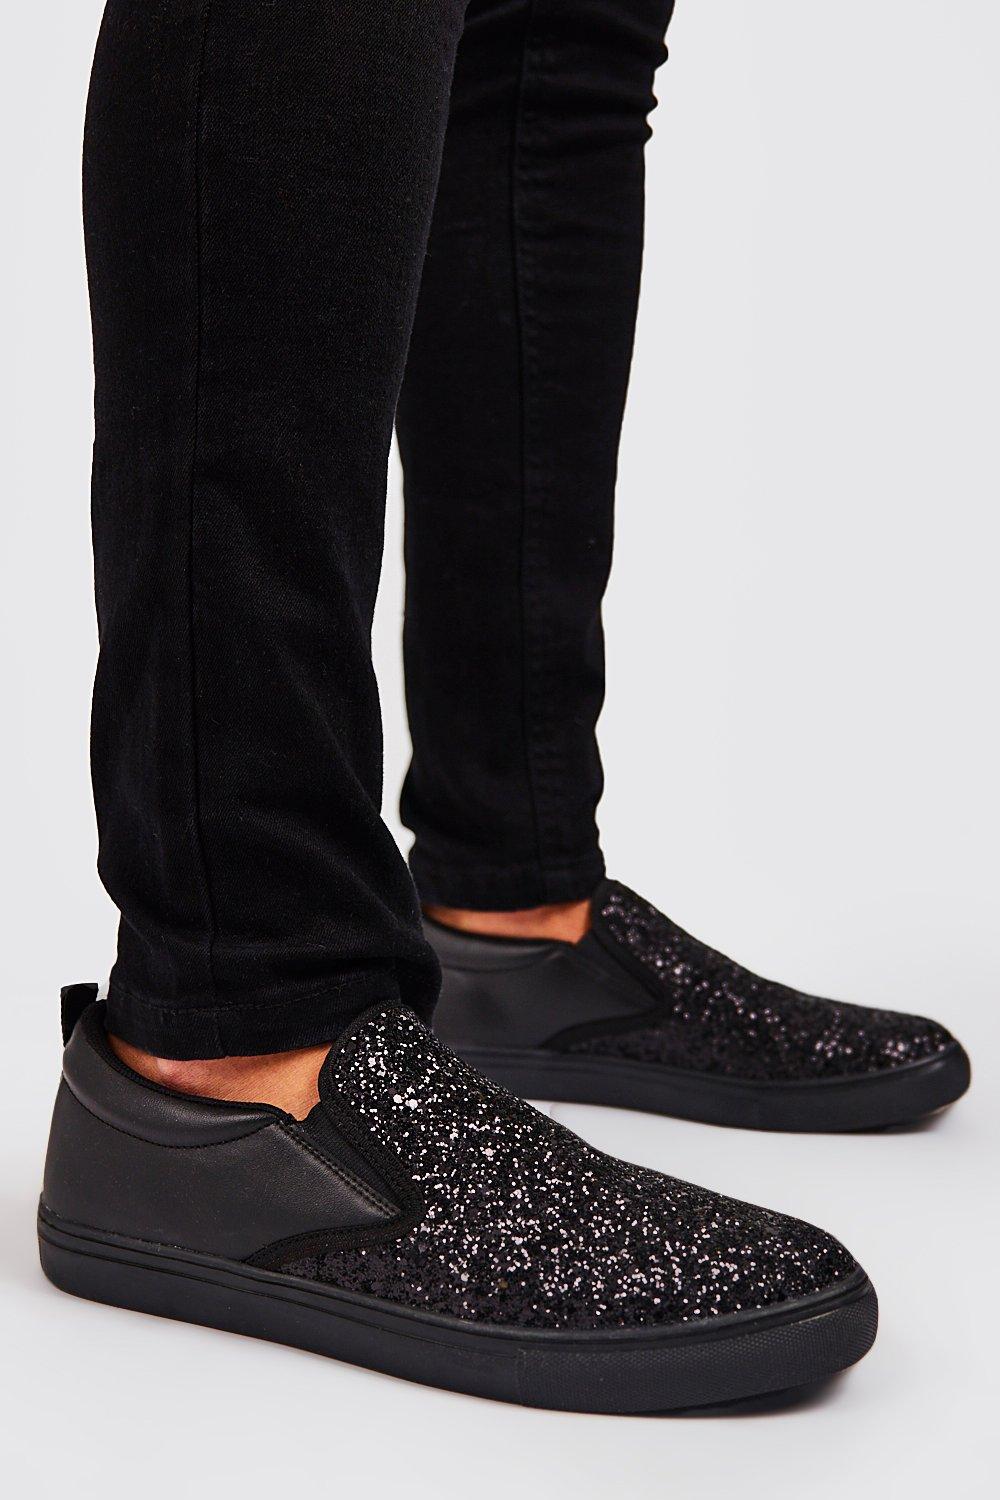 black sparkle slip on shoes